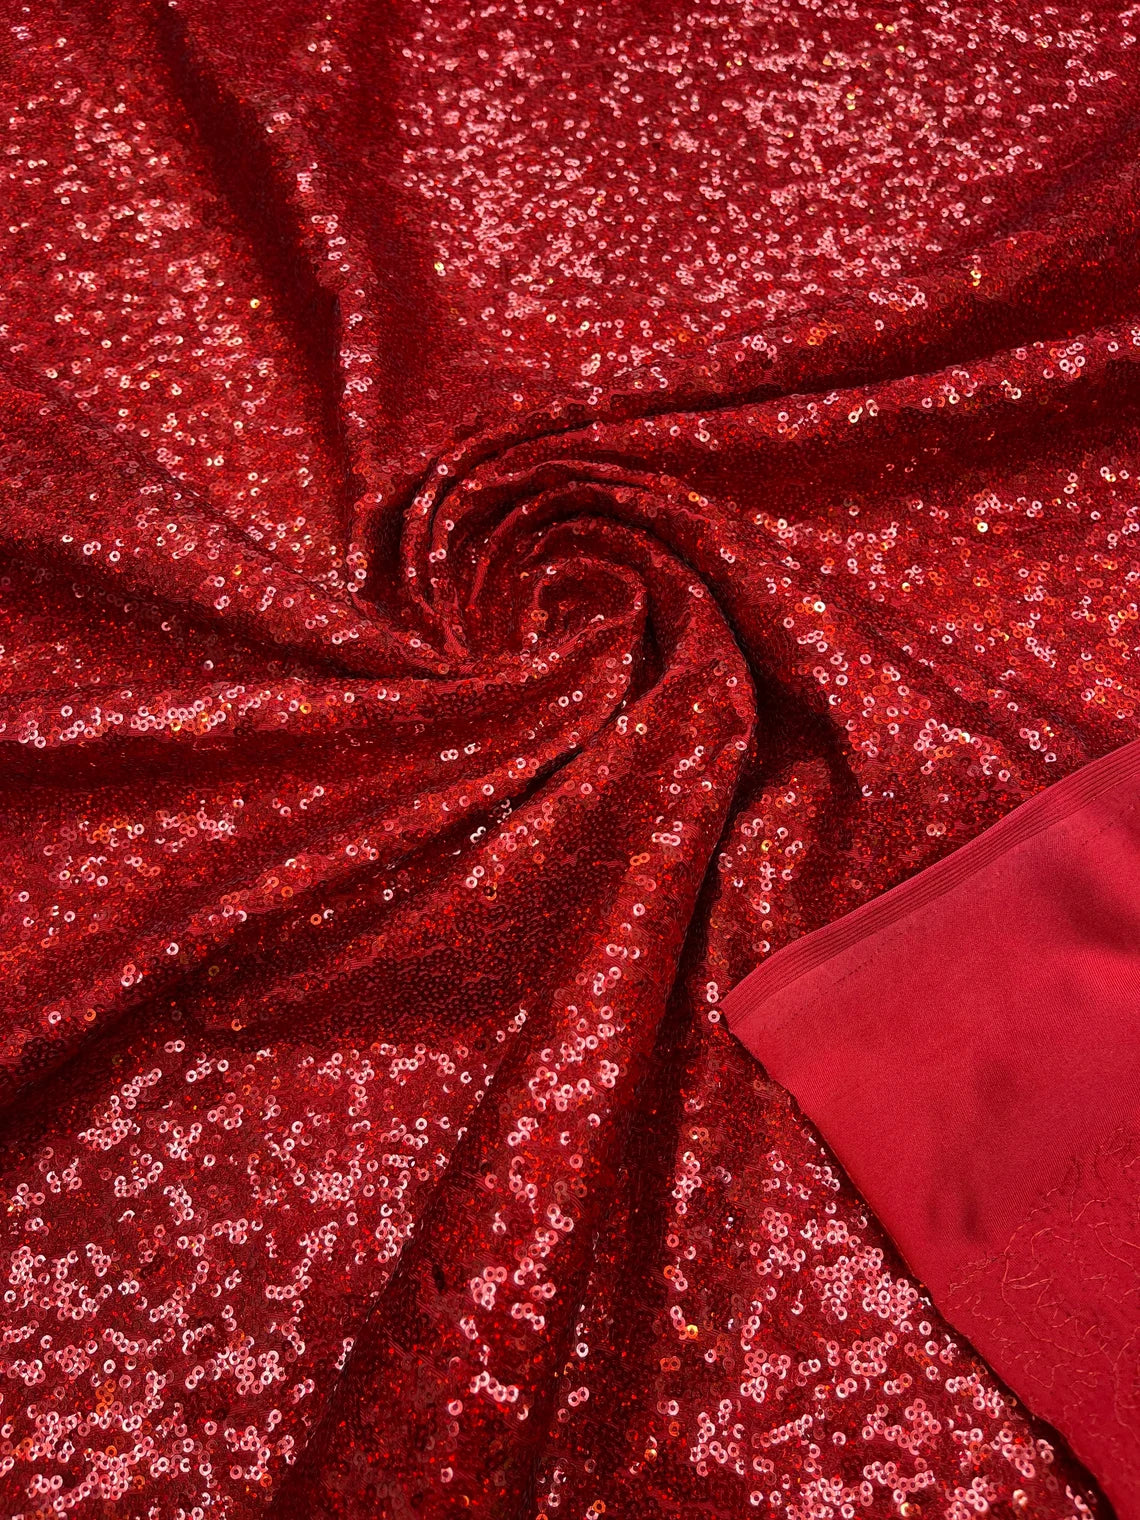 Mini Glitz Sequins on Milliskin - Red - 4 Way Stretch Milliskin Stretch Spandex Fabric by Yard